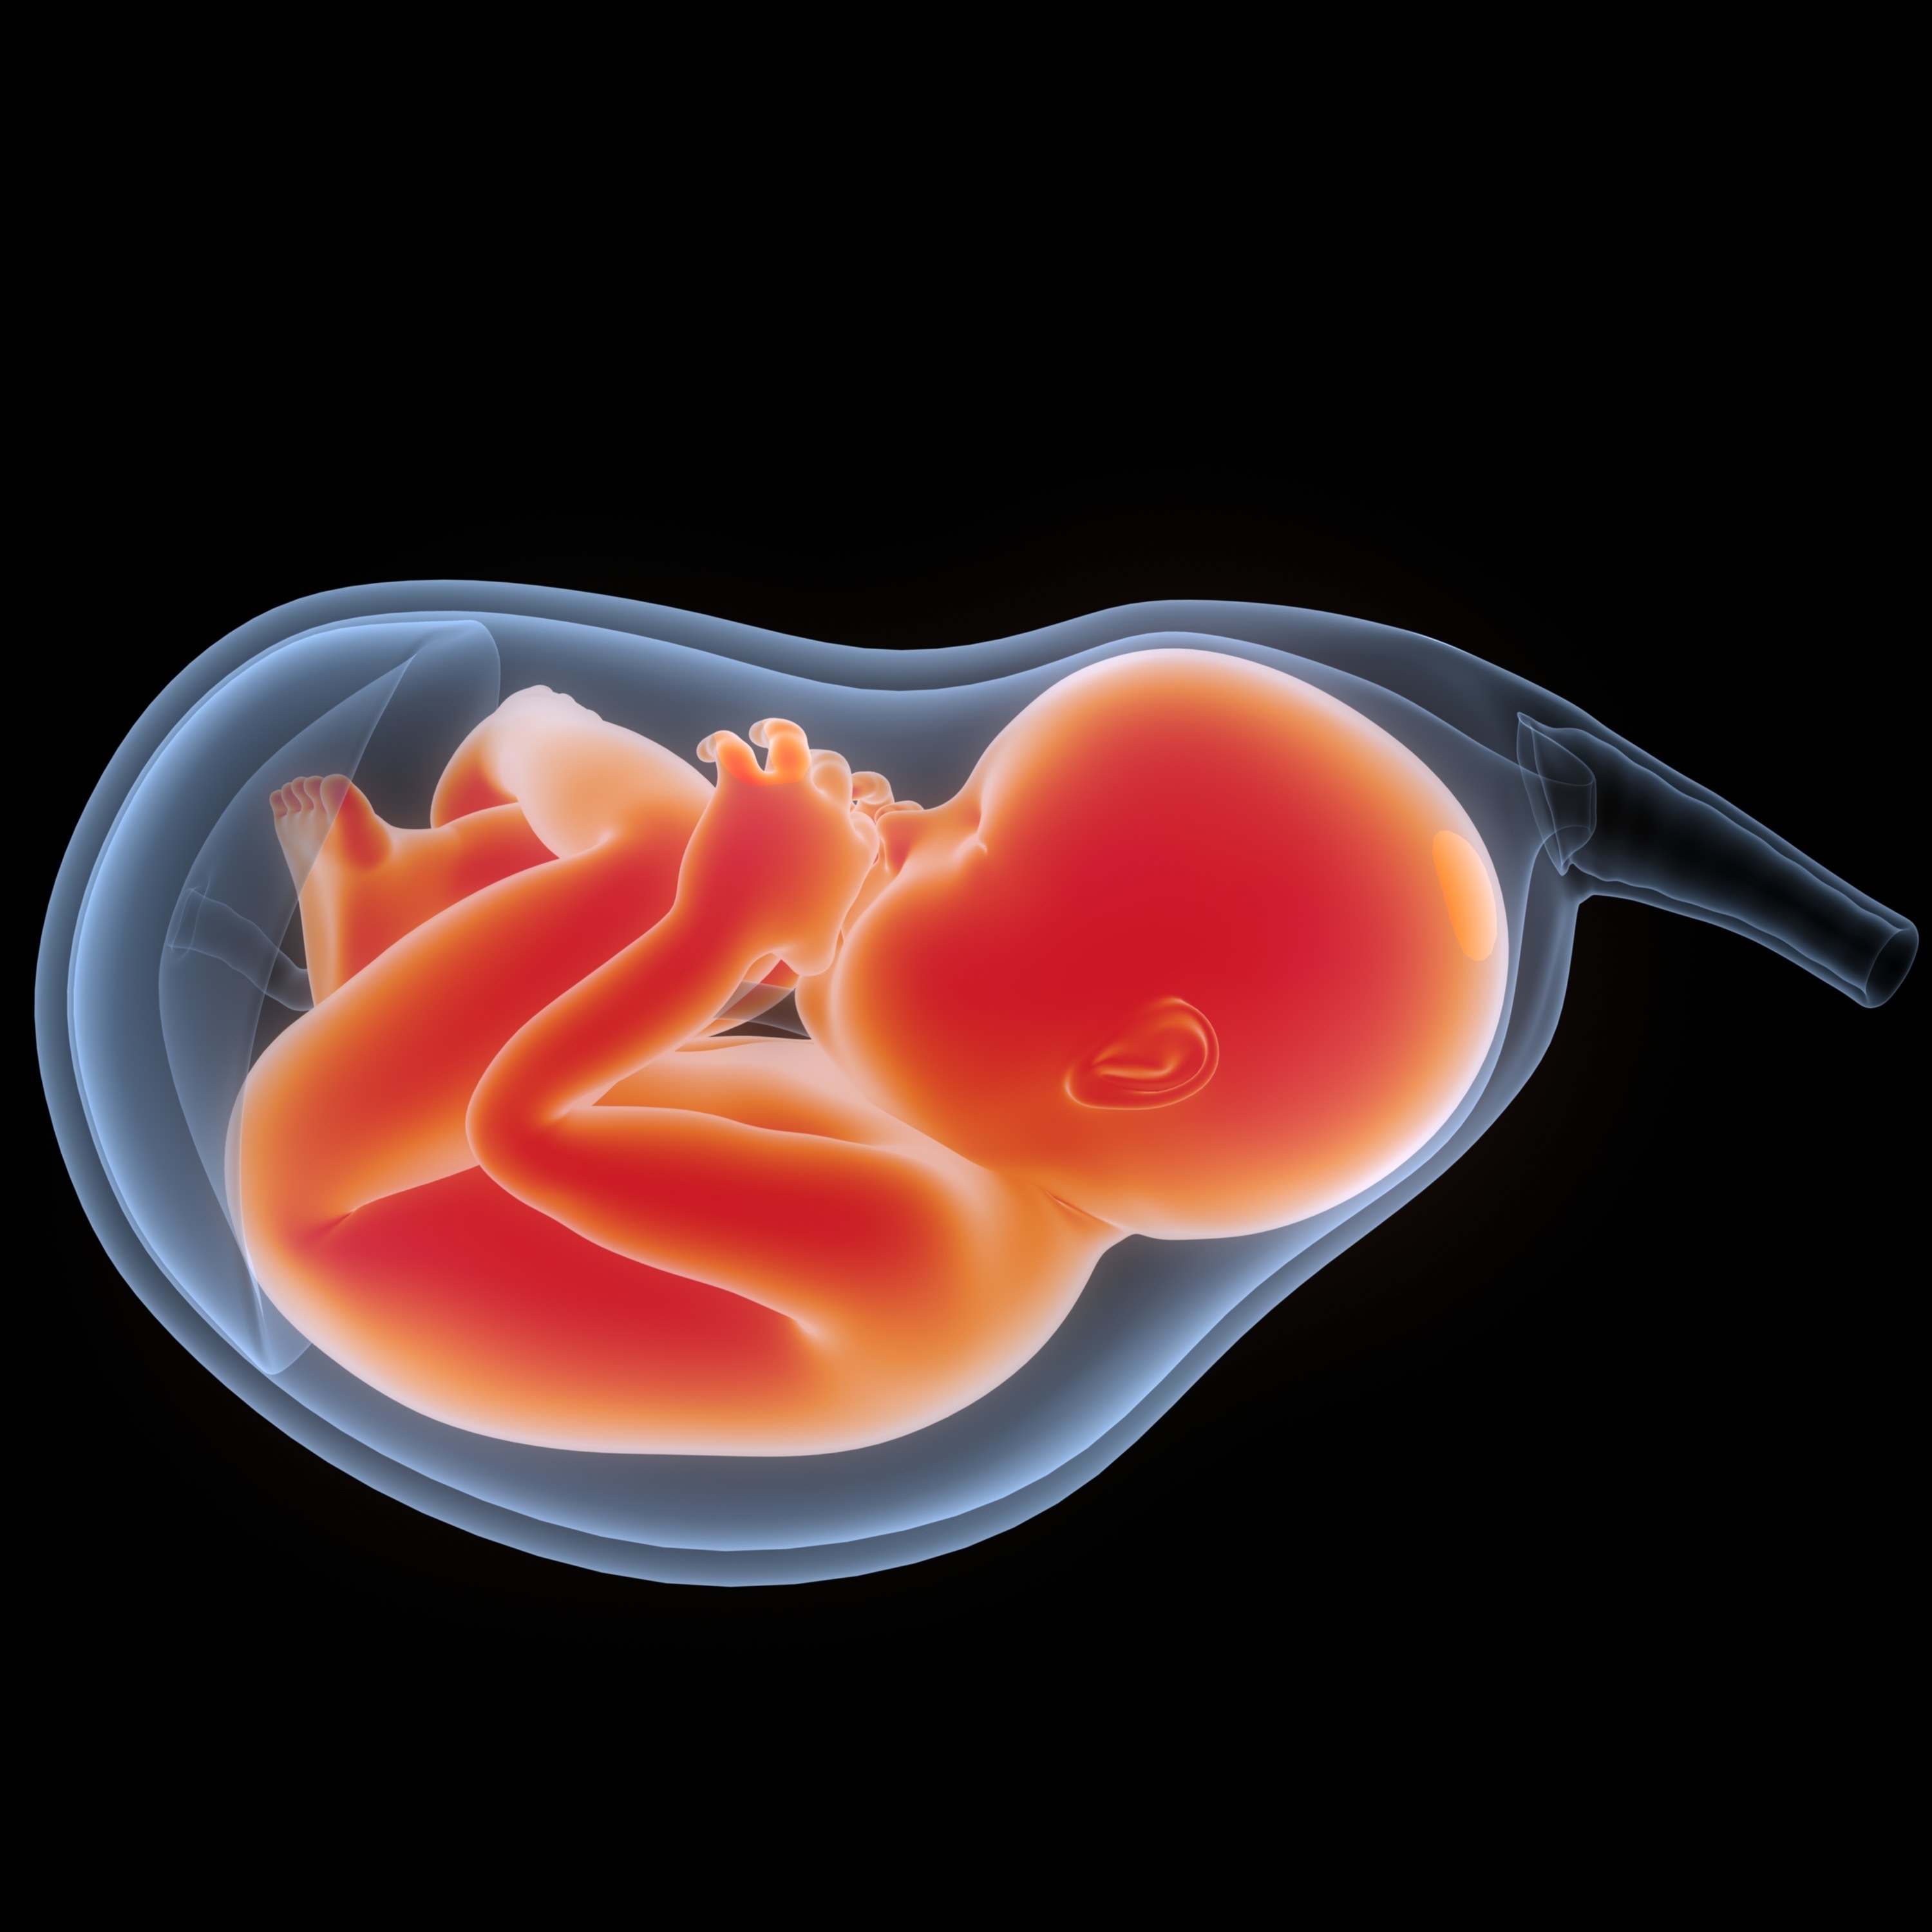 Closeup of an illustration of a fetus